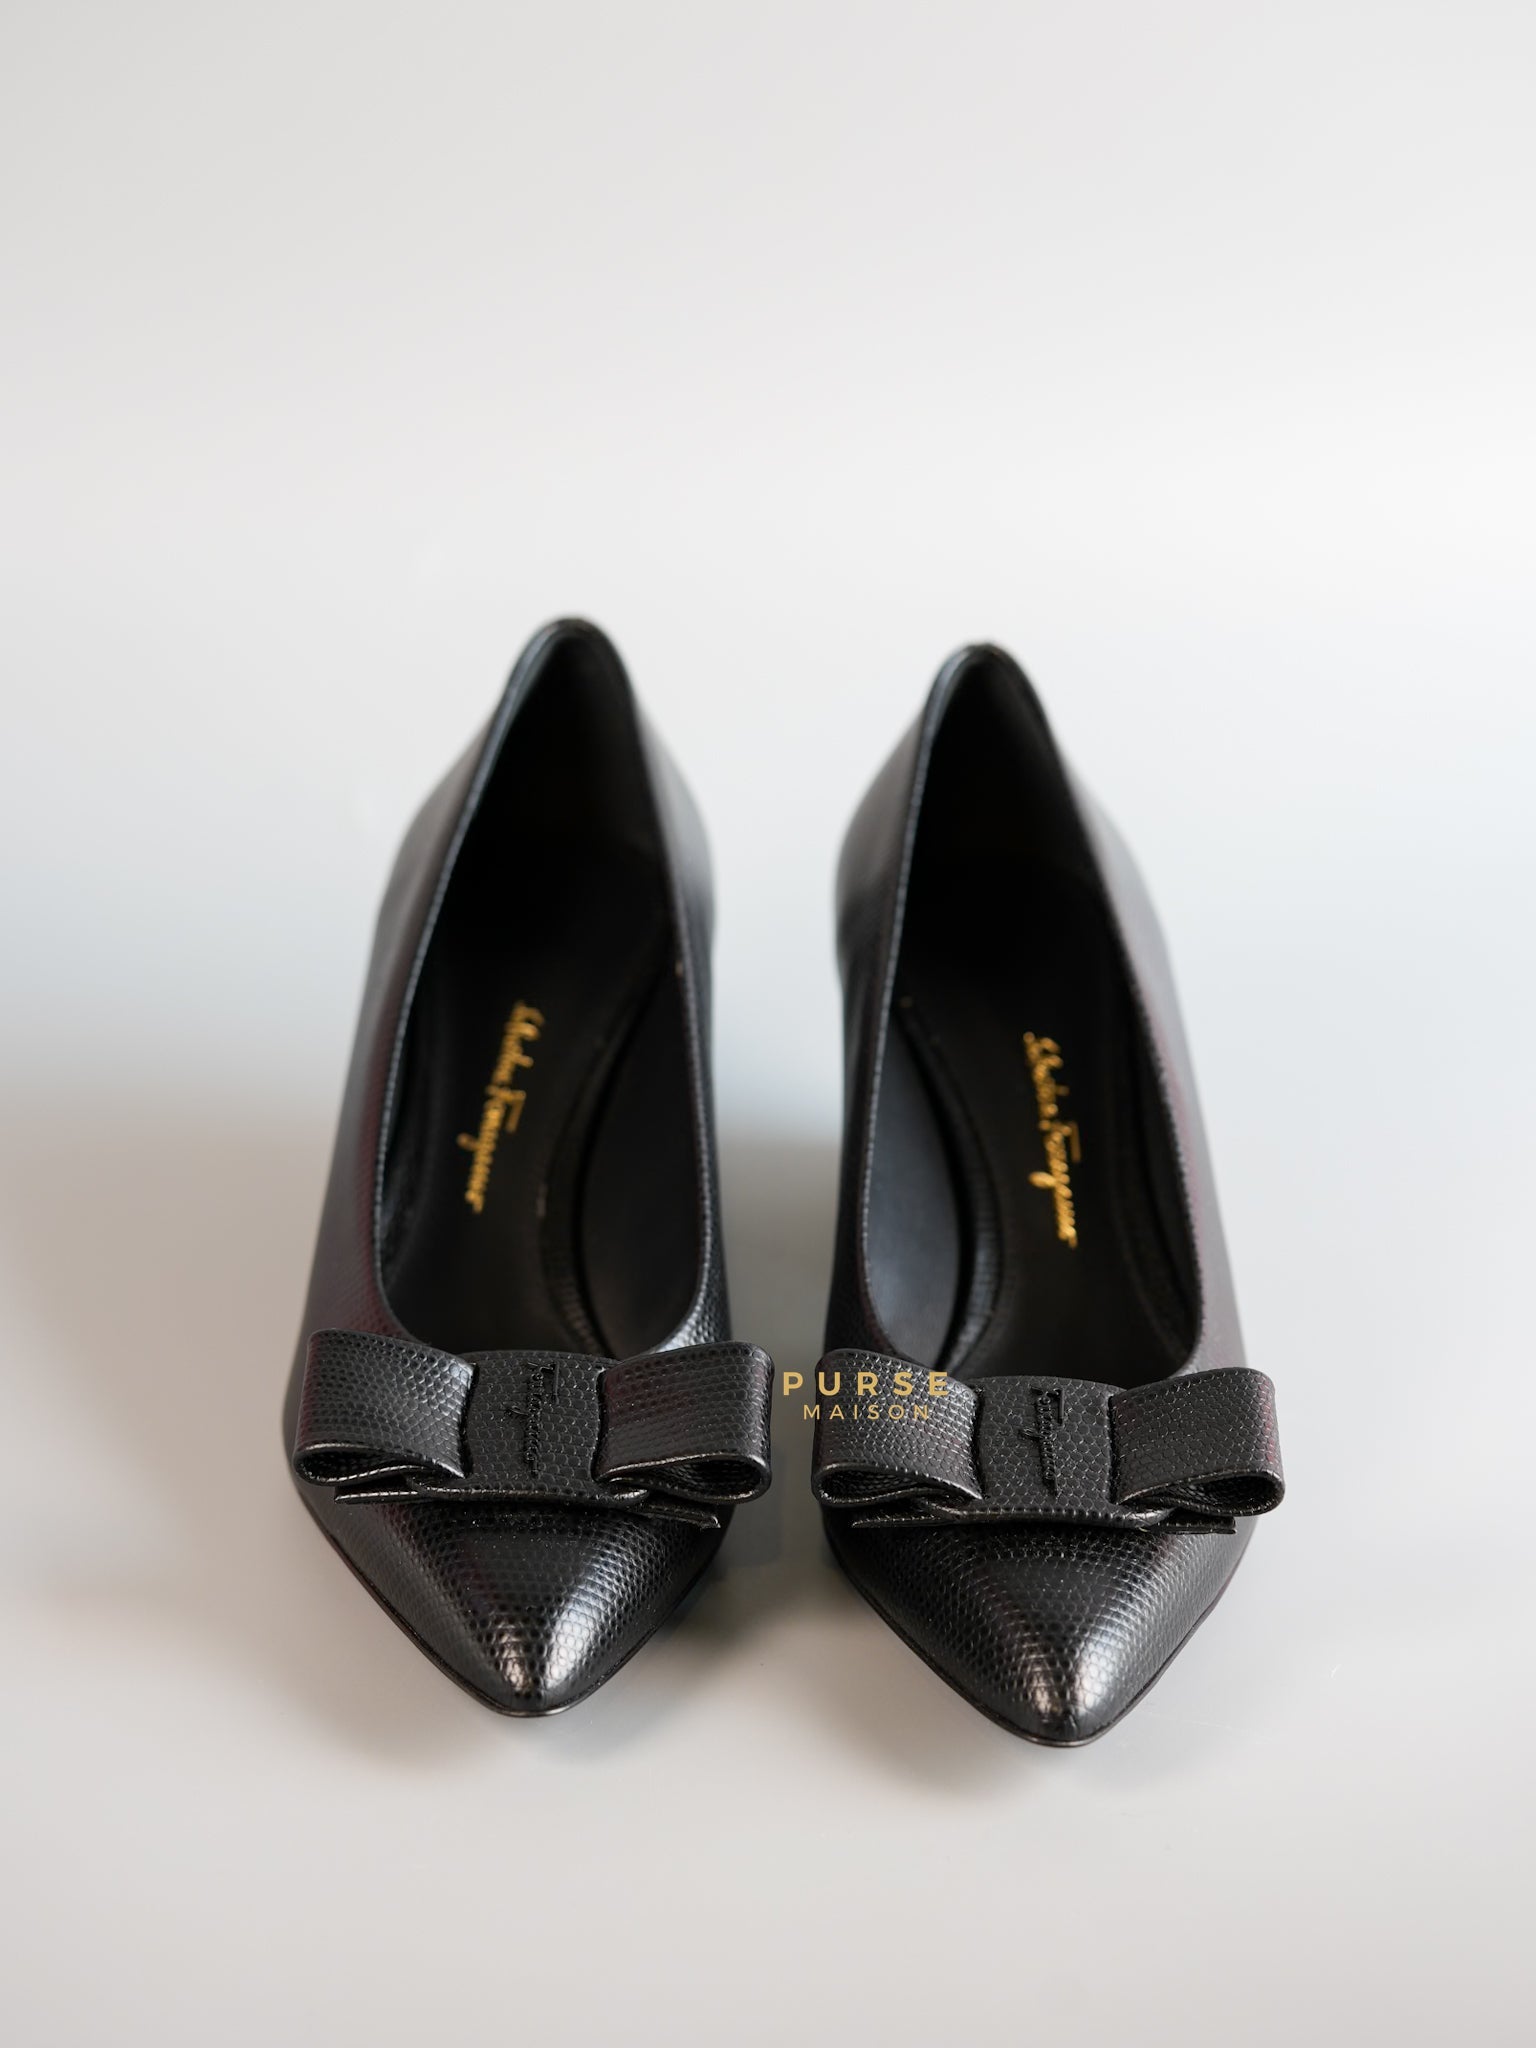 Viva 55 Sandals in Black Calfskin Leather Size 6.5 (25cm) | Purse Maison Luxury Bags Shop